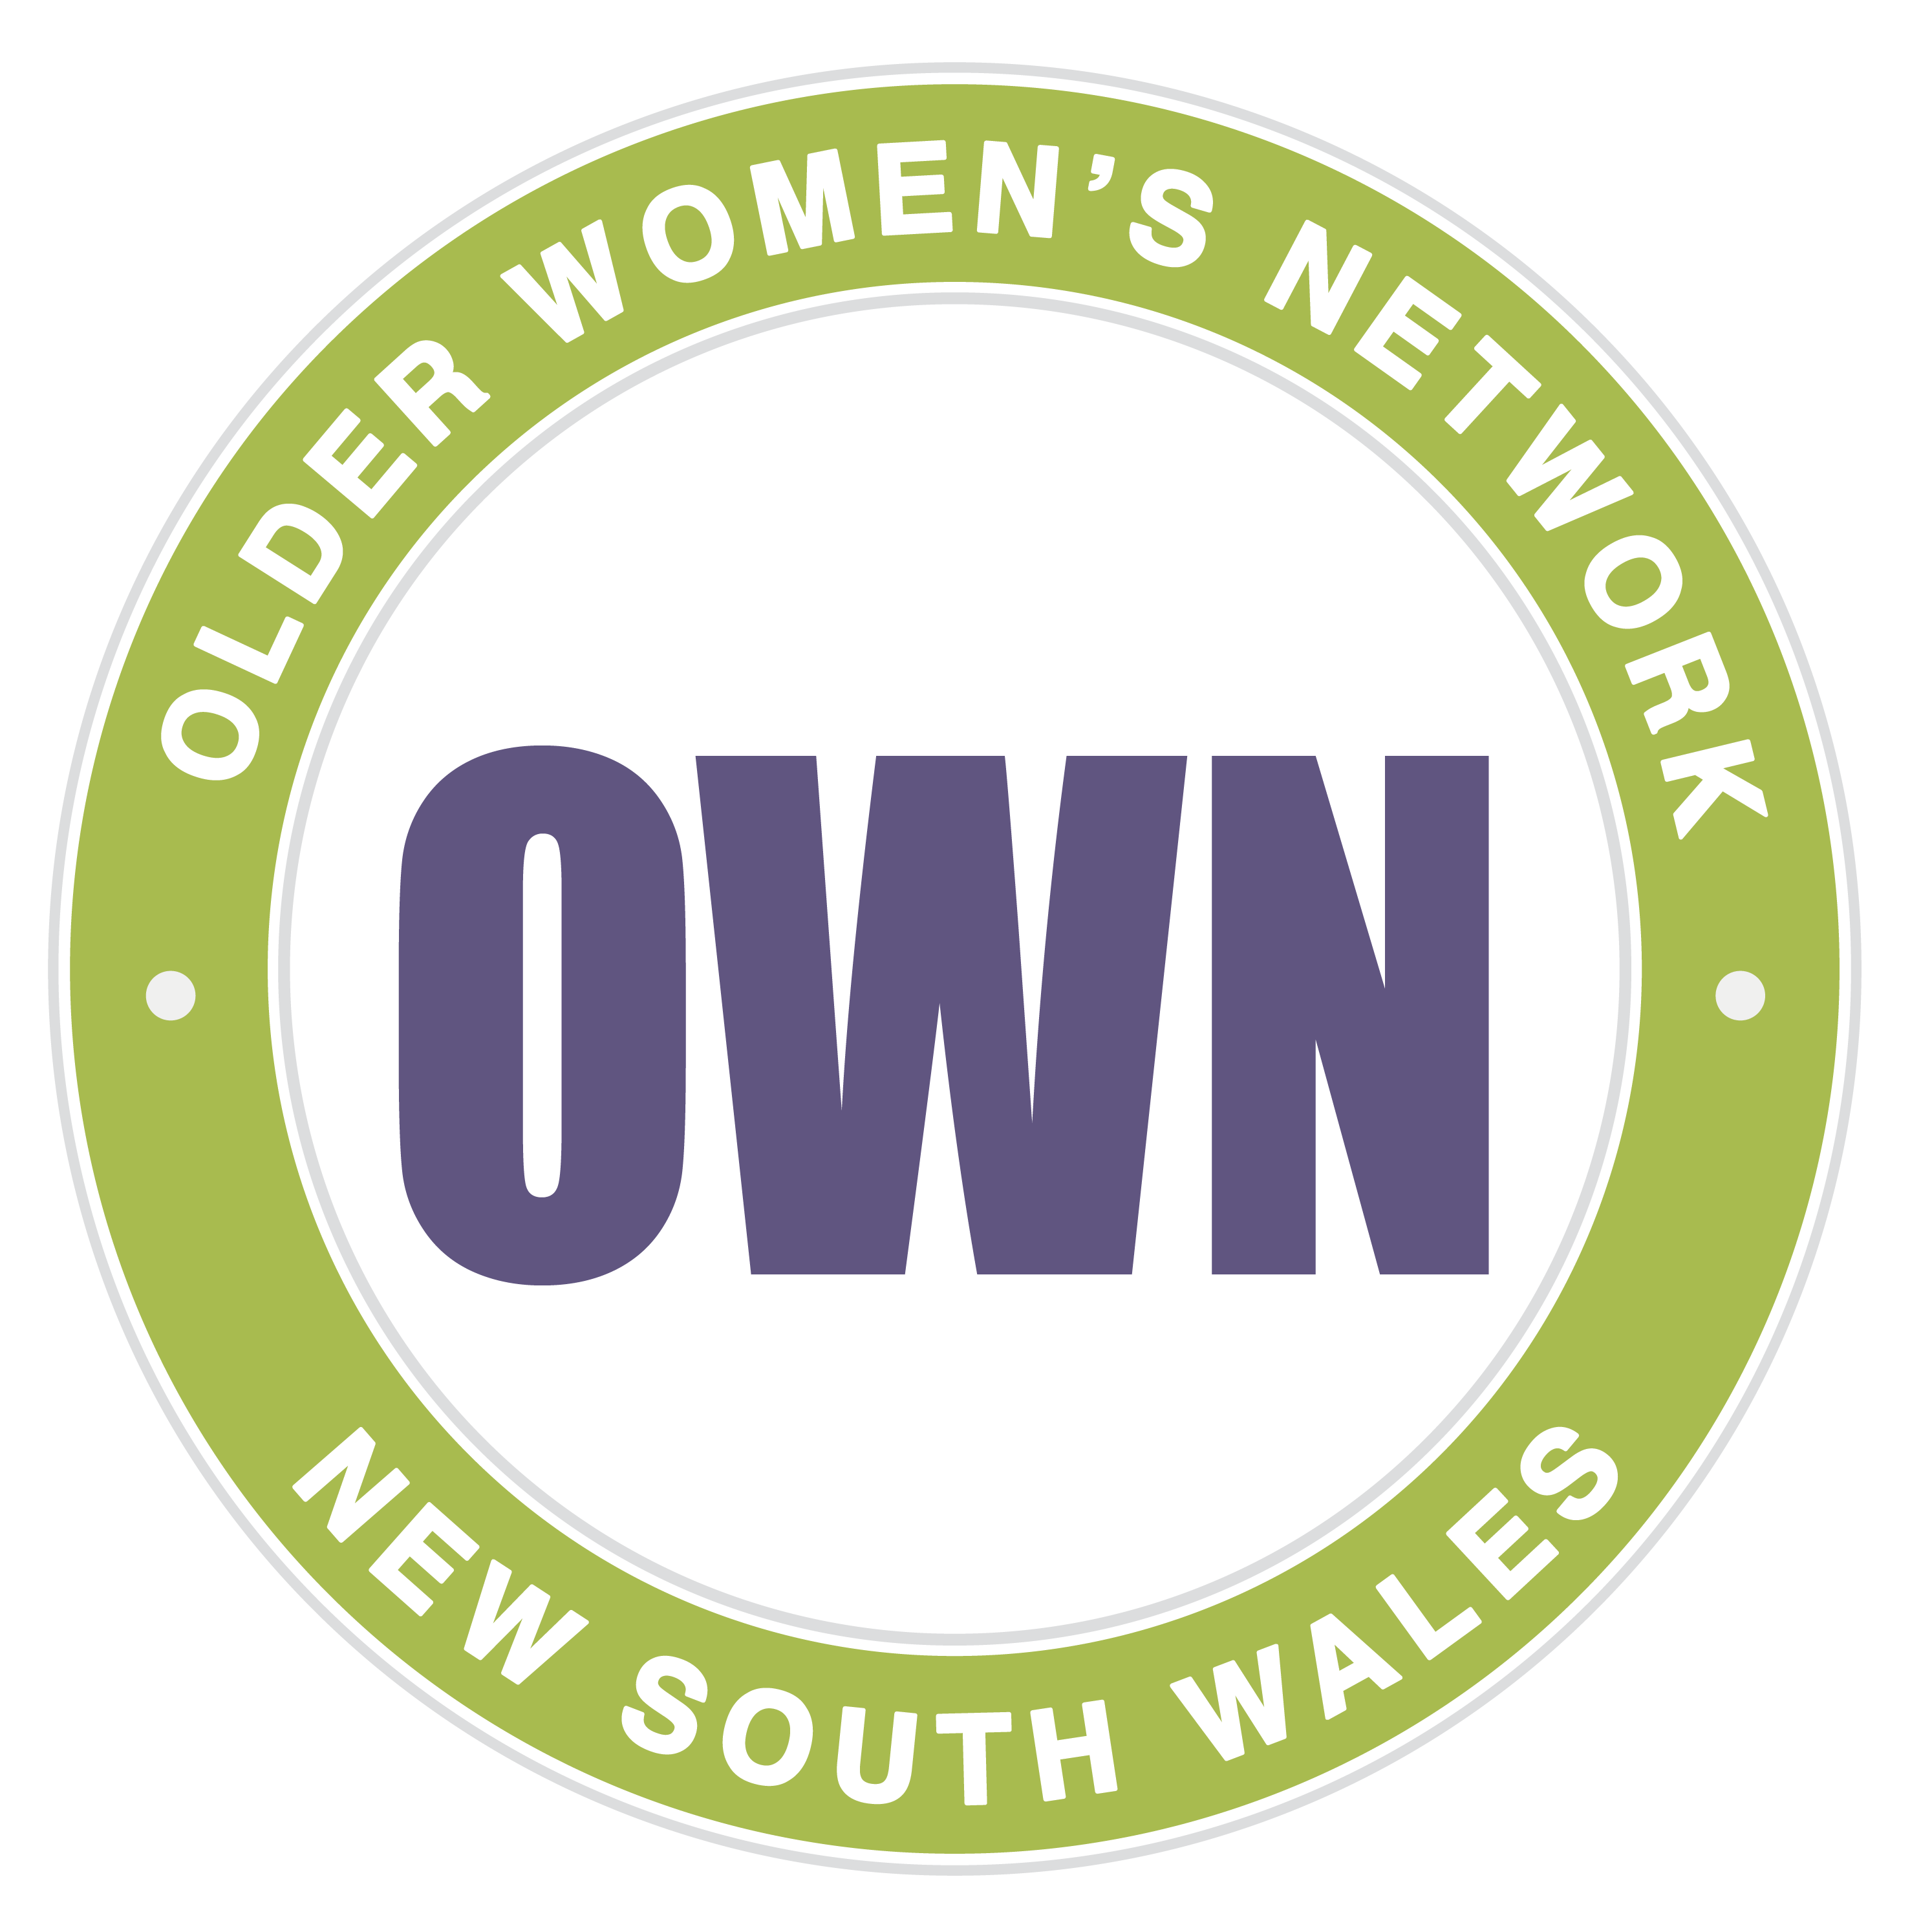 Older Women's Network NSW